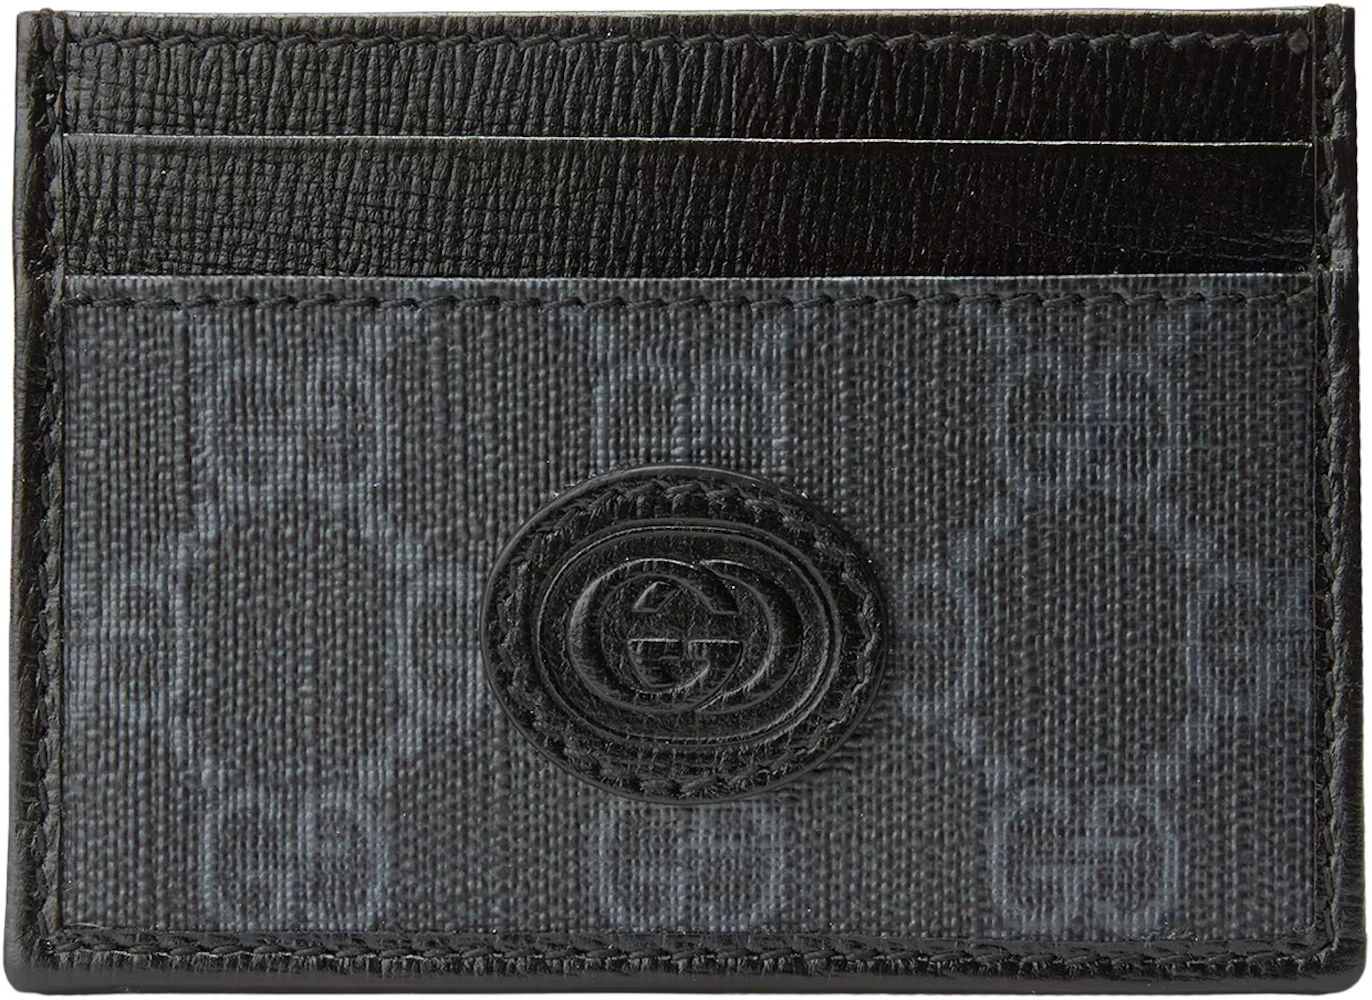 Mini wallet with Interlocking G in black GG Supreme